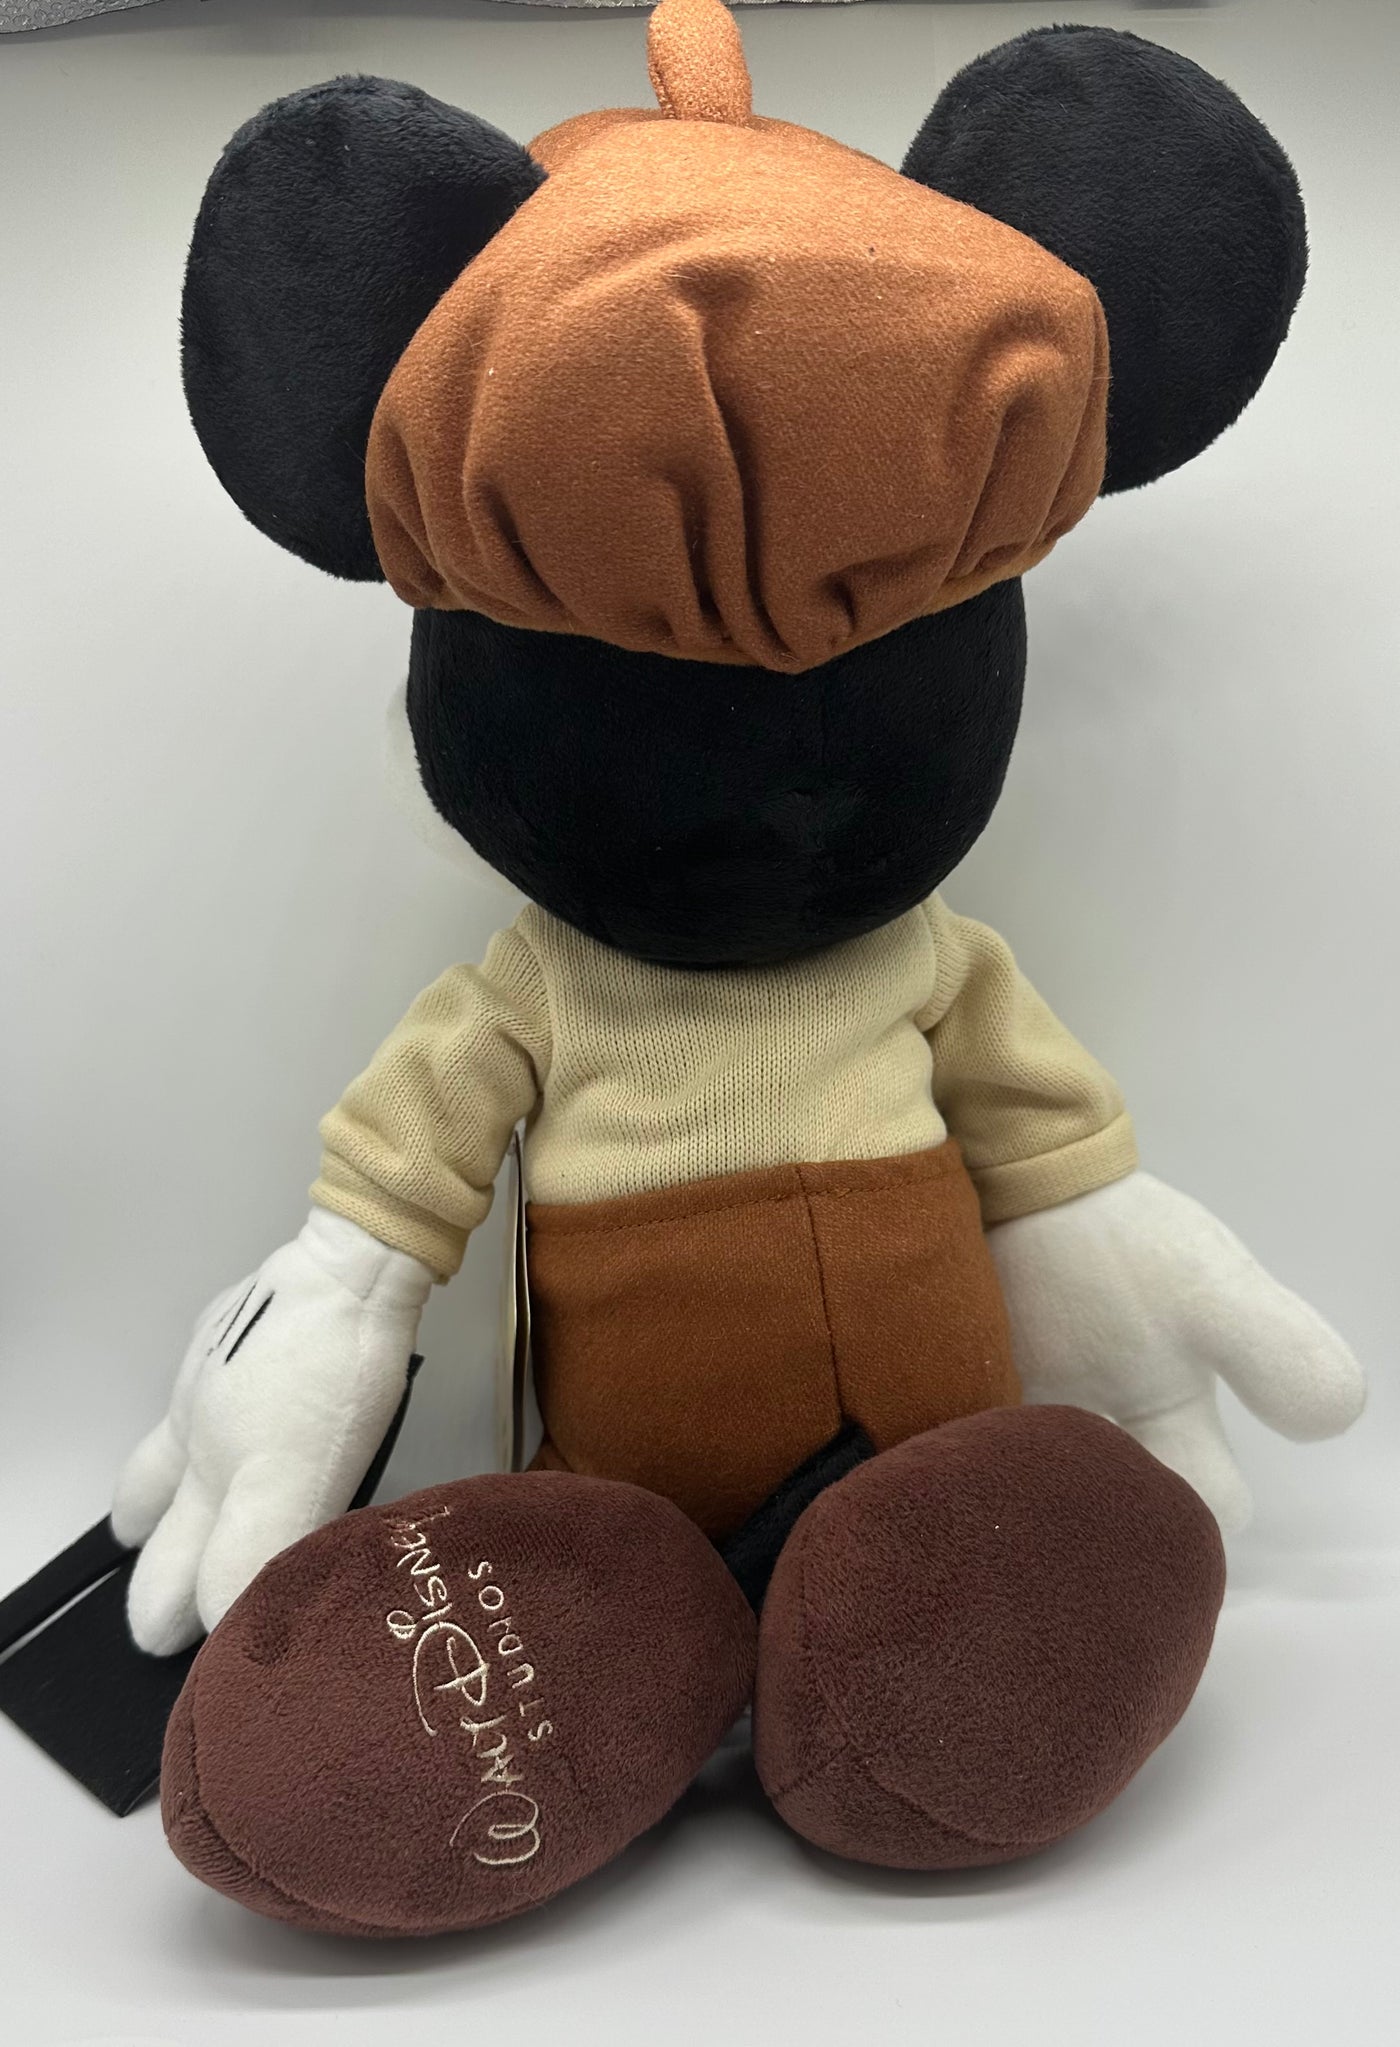 Disney Walt Disney Studios Steamboat Willie Director Plush New with Tag